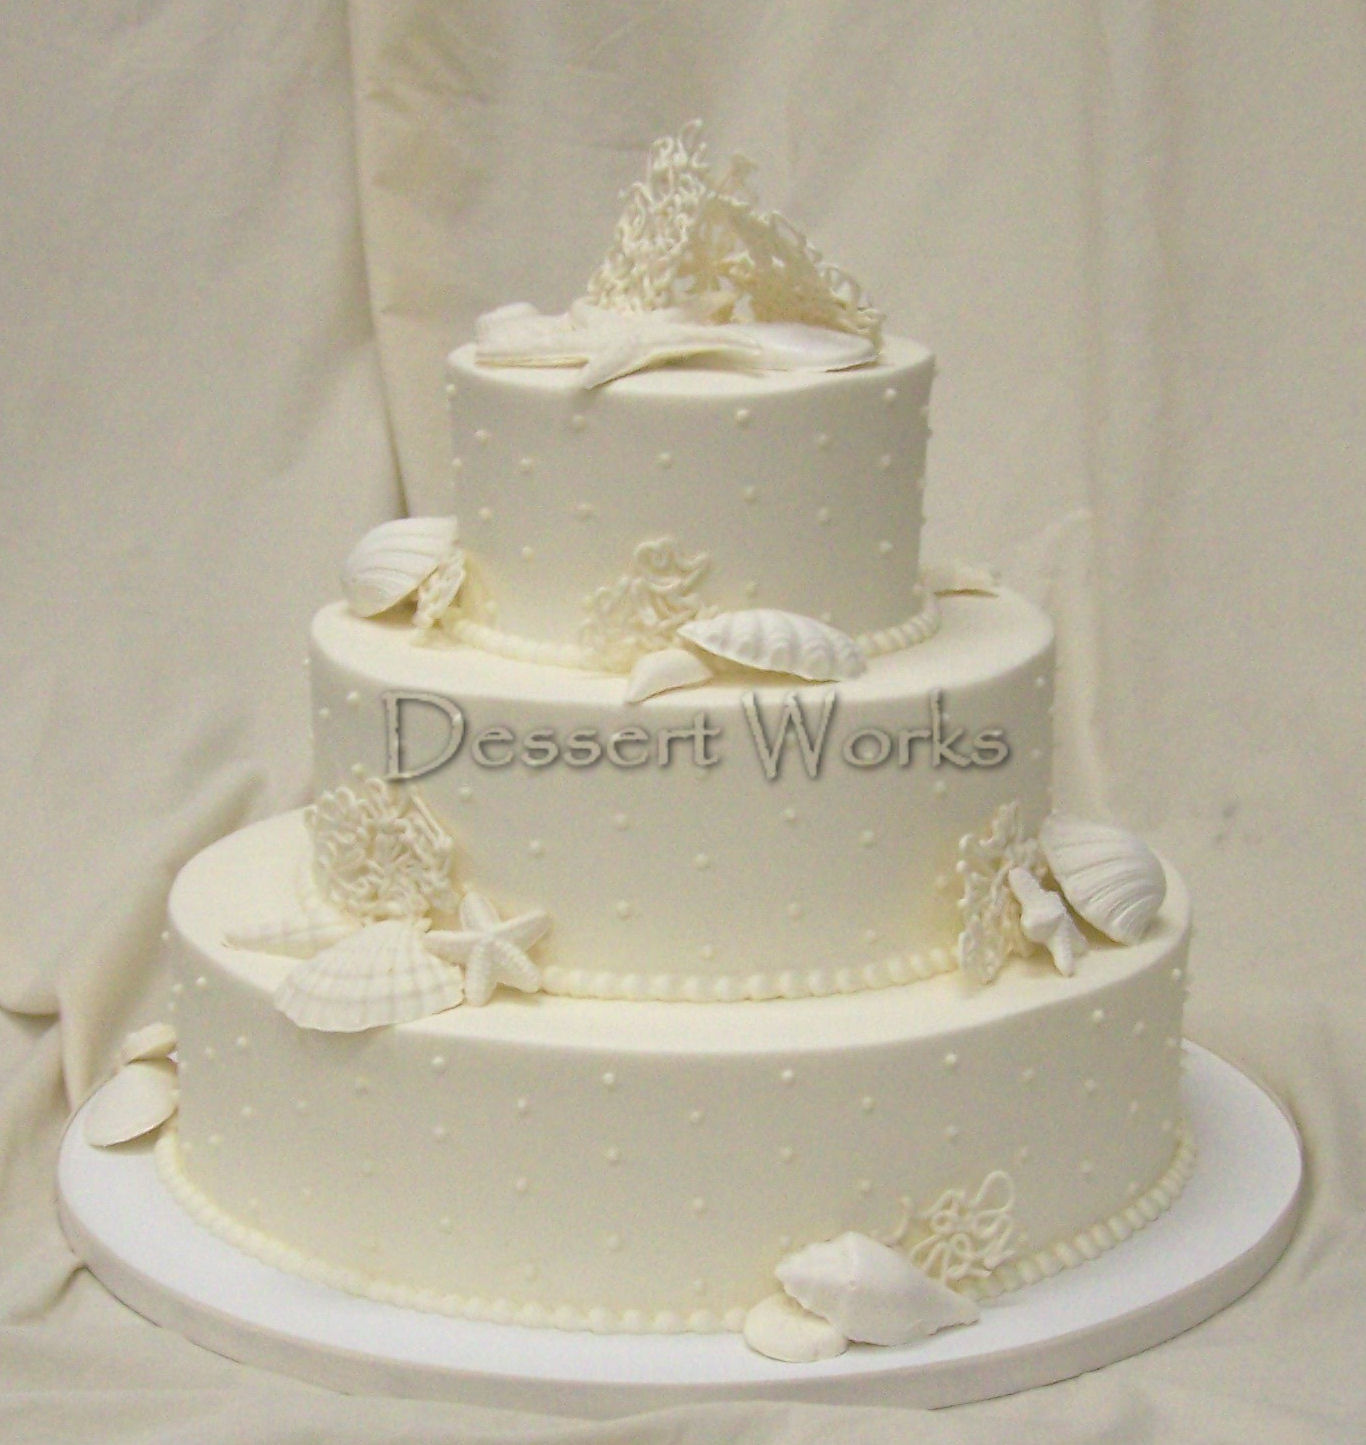 chocolate cake icing decorating ideas beach themed wedding cakes